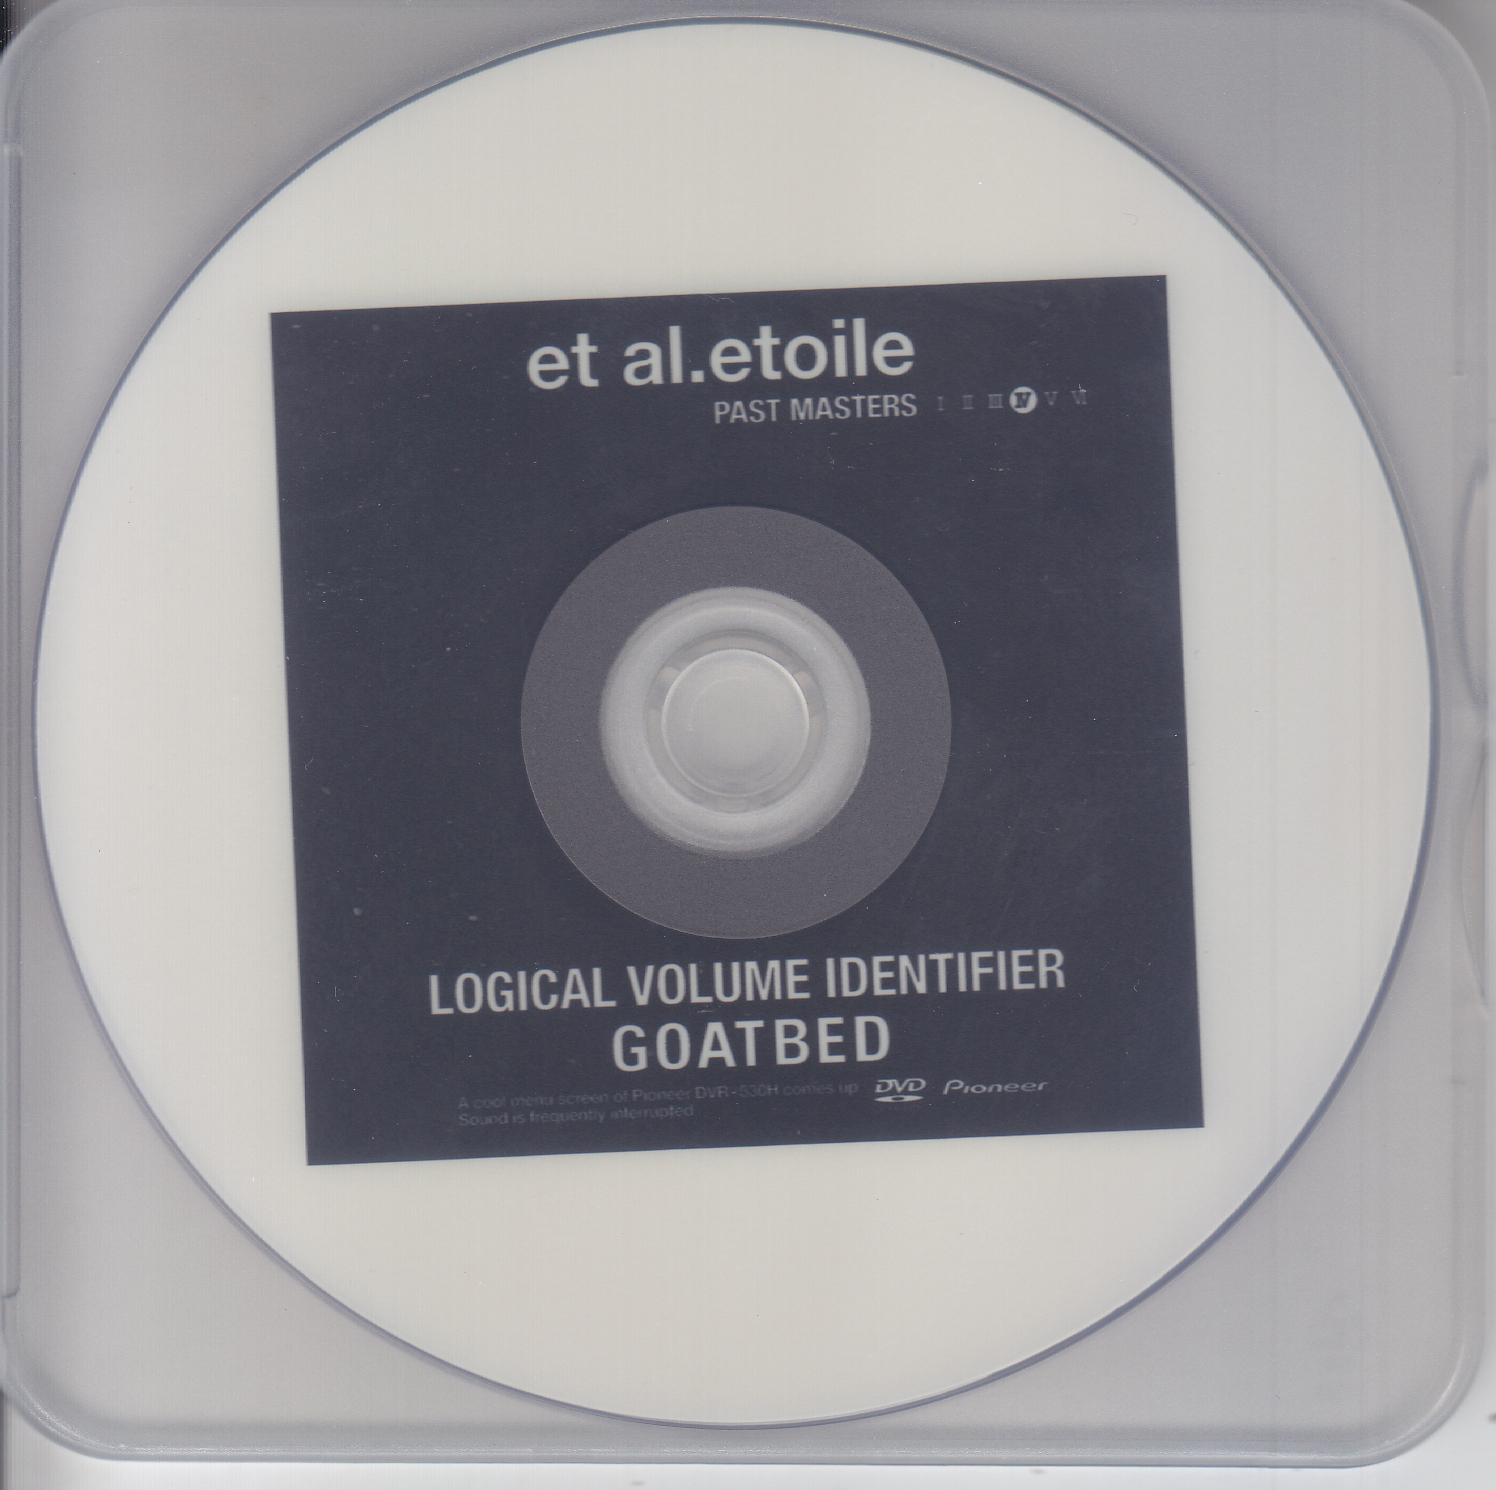 GOATBED ( ゴートベッド )  の DVD et al.etoile PAST MASTERS 4